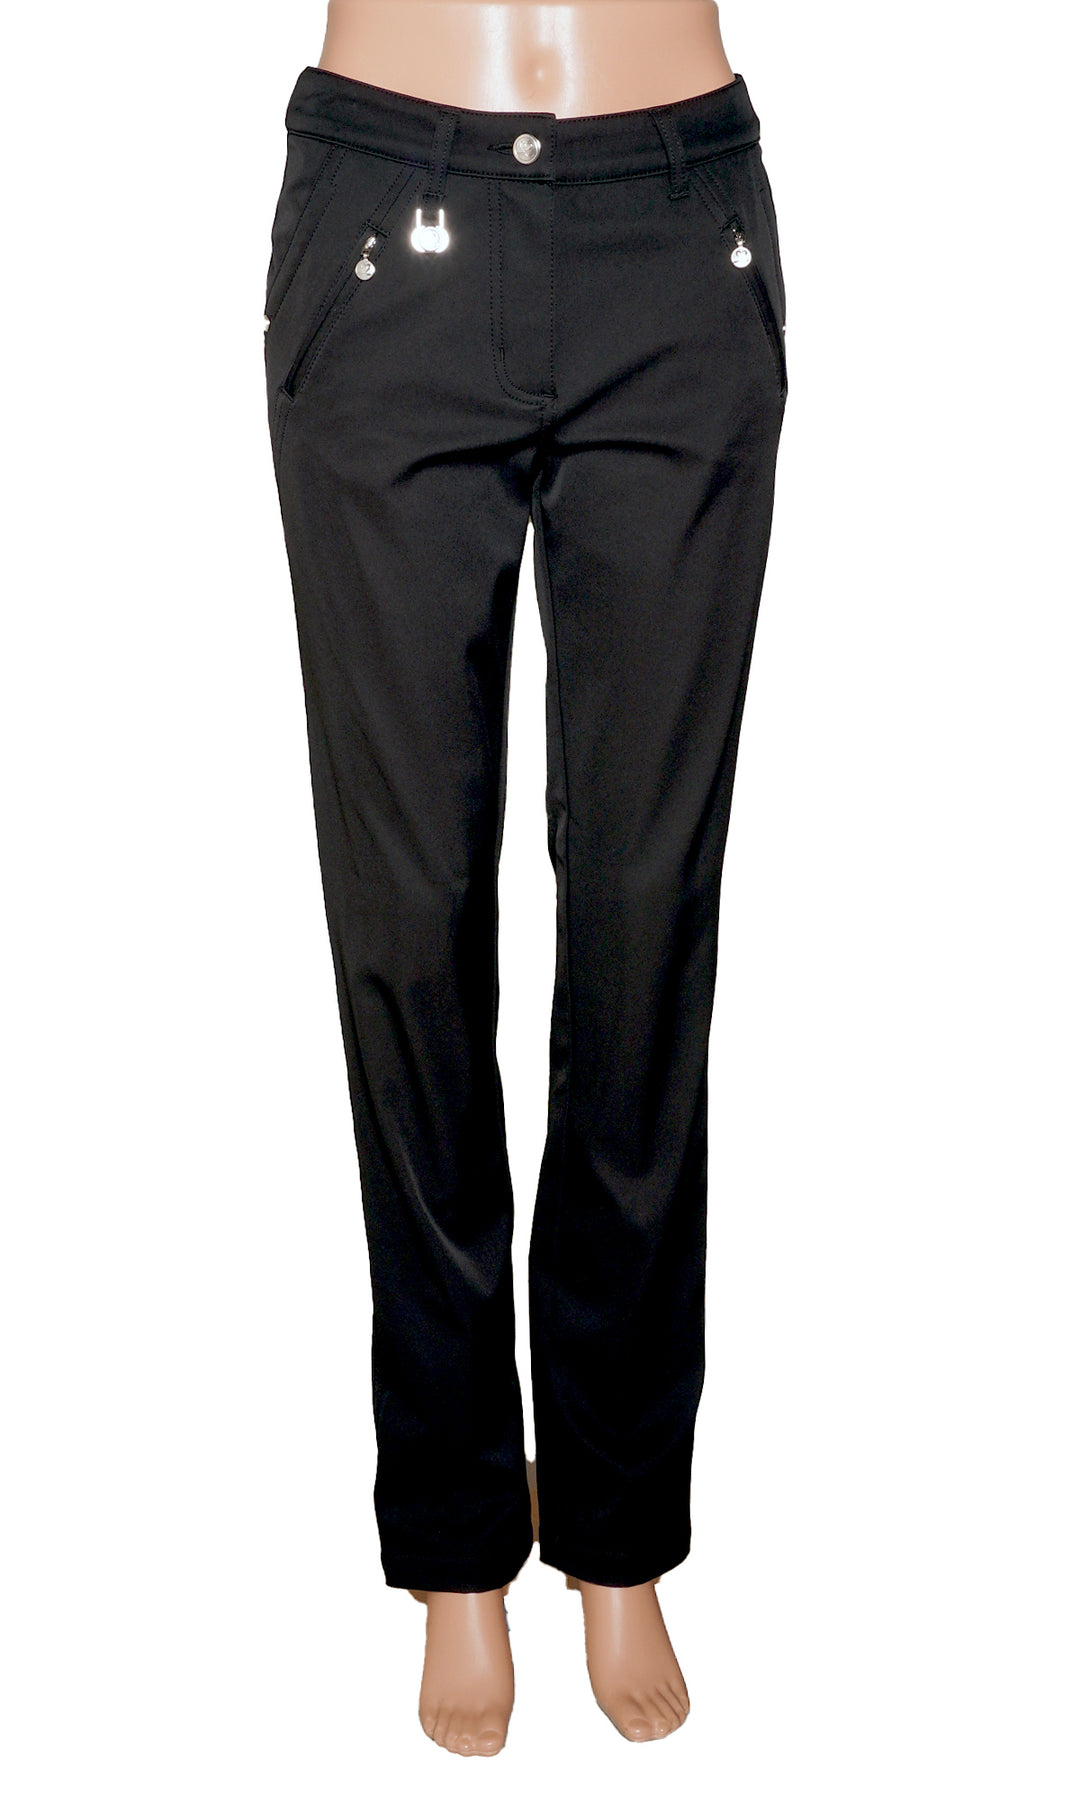 Daily Sports Irene Golf Pants - Black - Size 2 - Skorzie